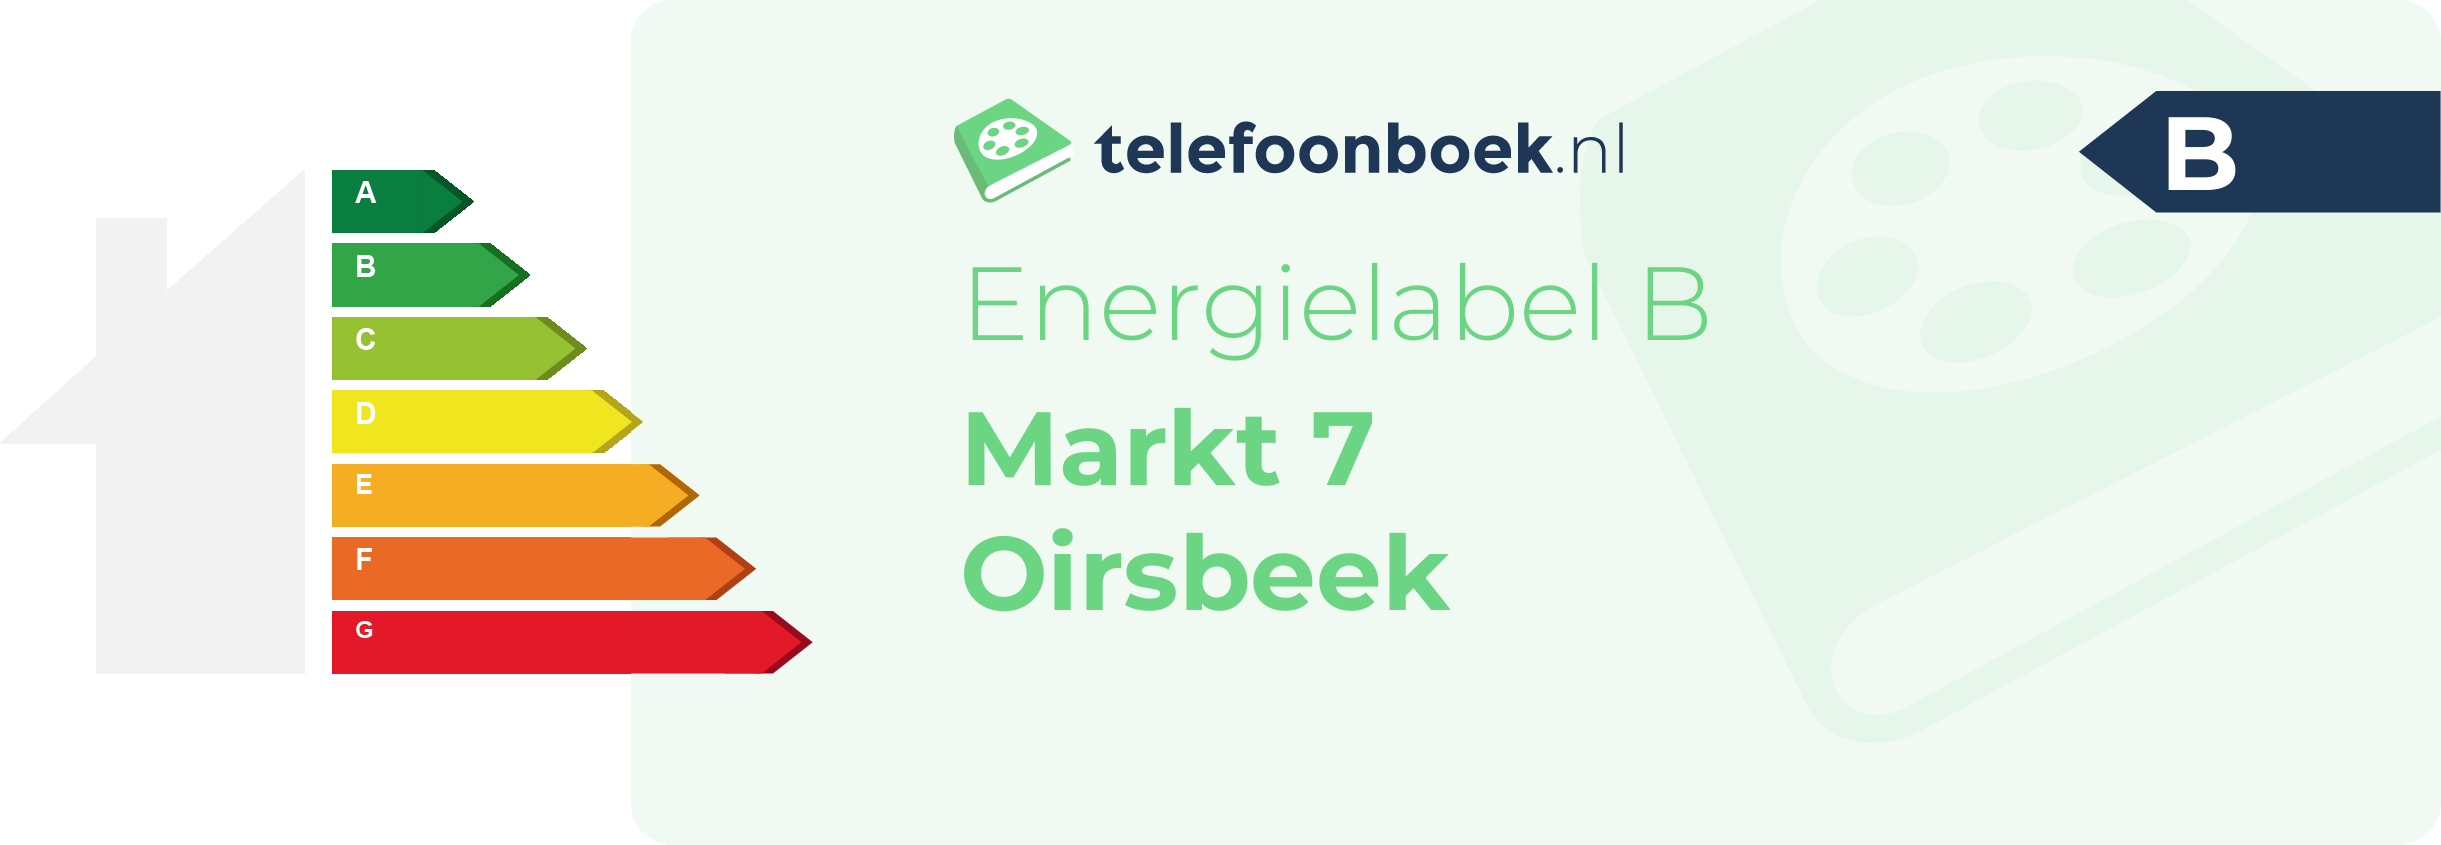 Energielabel Markt 7 Oirsbeek